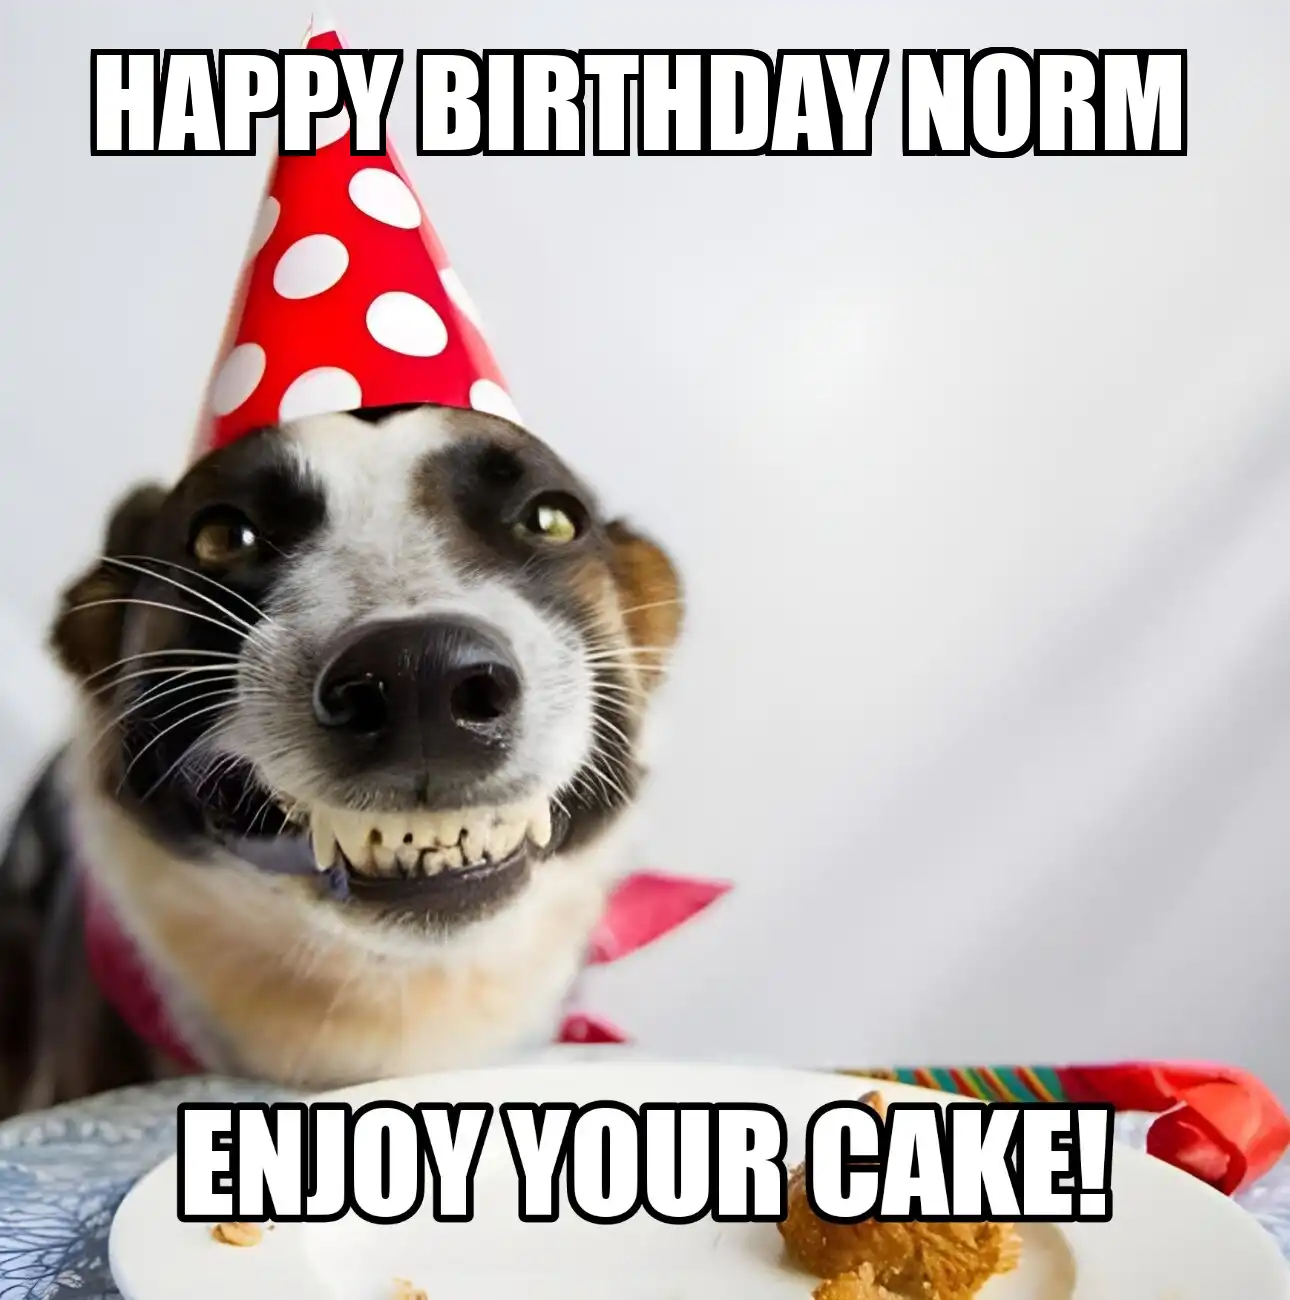 Happy Birthday Norm Enjoy Your Cake Dog Meme